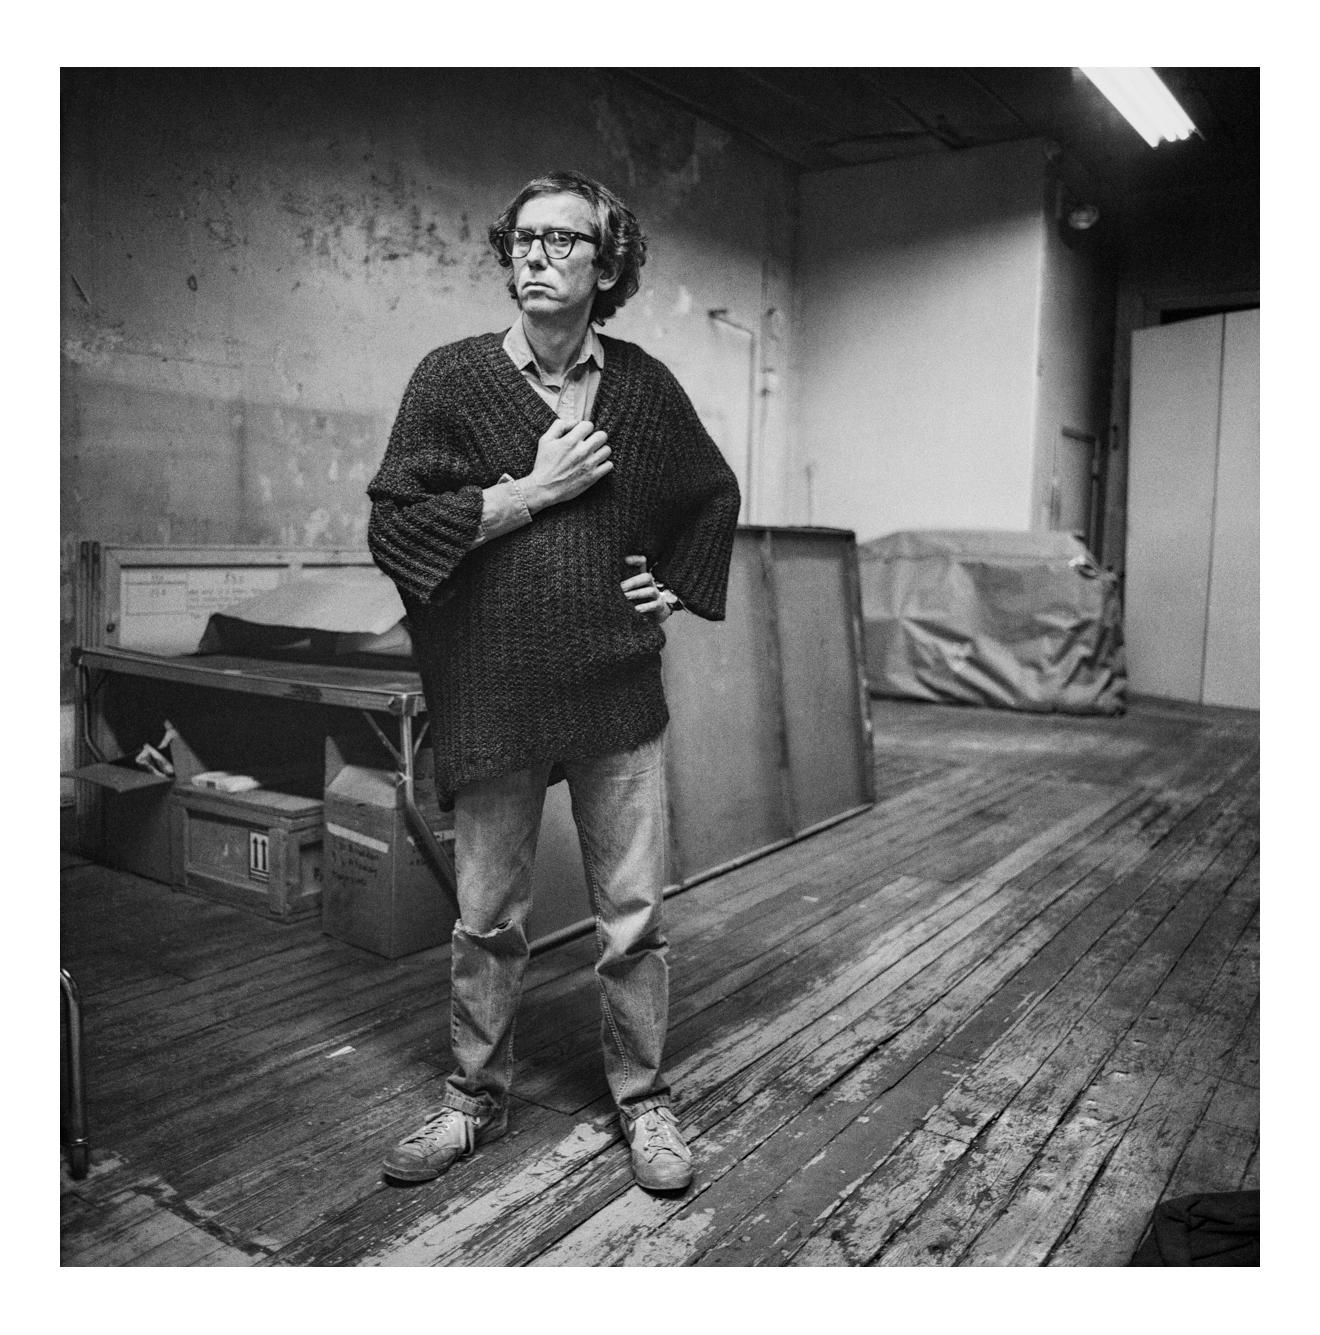 Jonathan Becker Portrait Photograph - Christo in his studio, New York, 4 December 1983